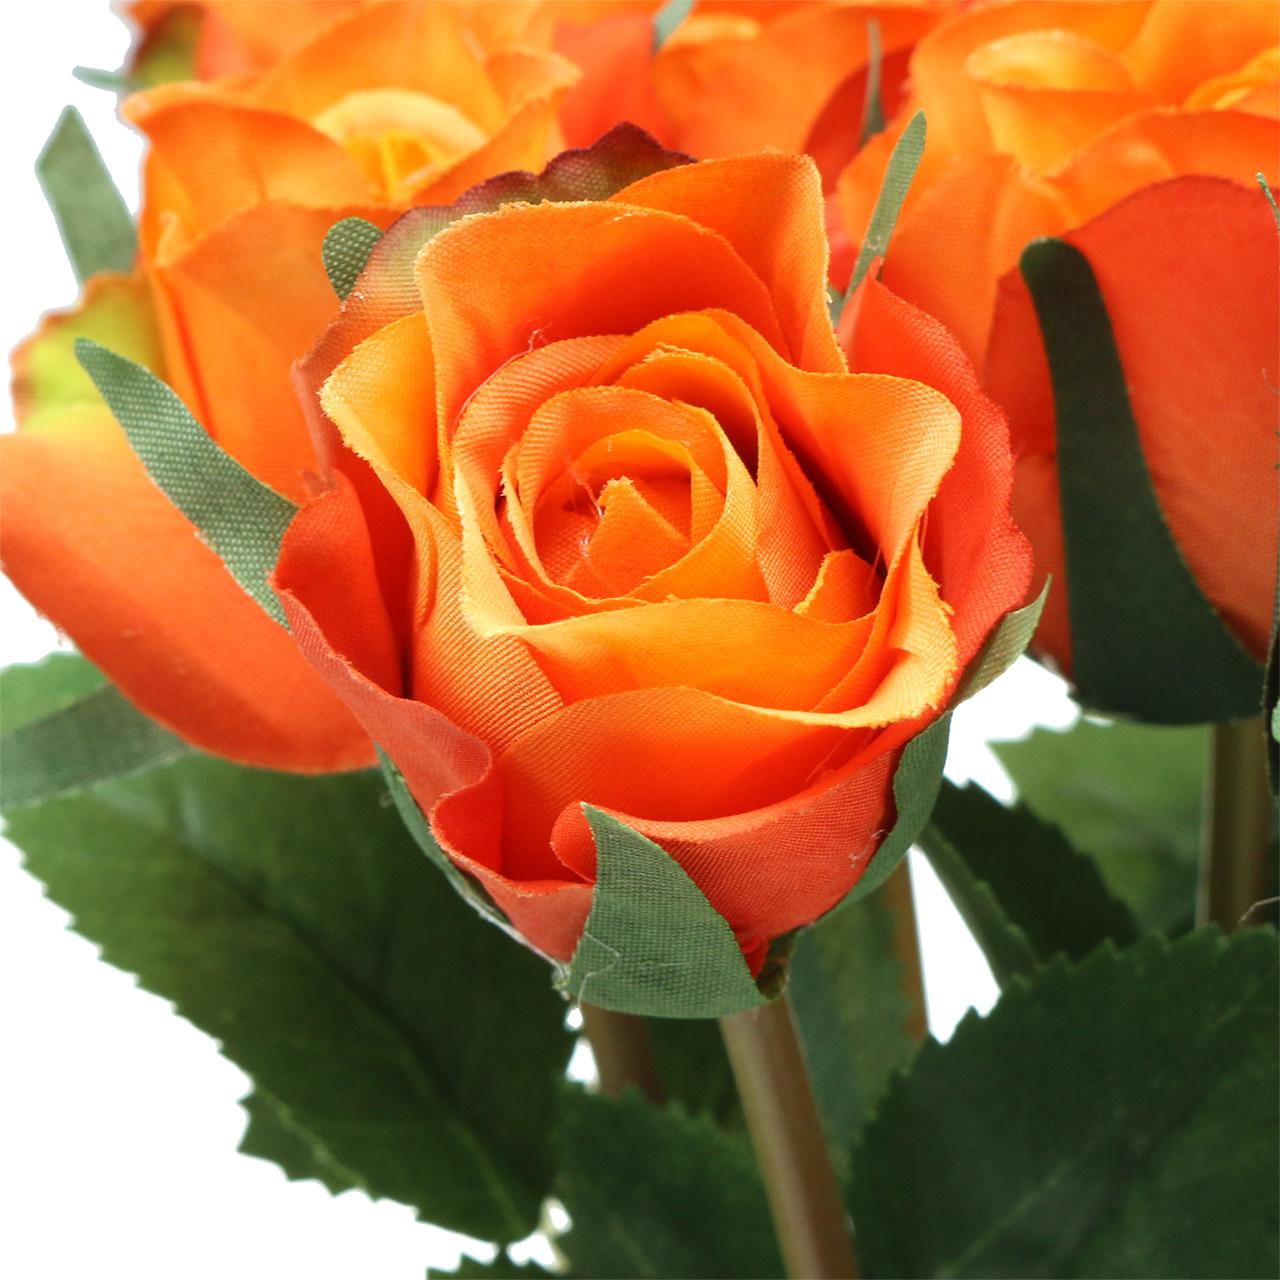 Rose Bauernrose Seidenblume Kunstblume Kunstpflanze orange L 41 cm 180249 F7 